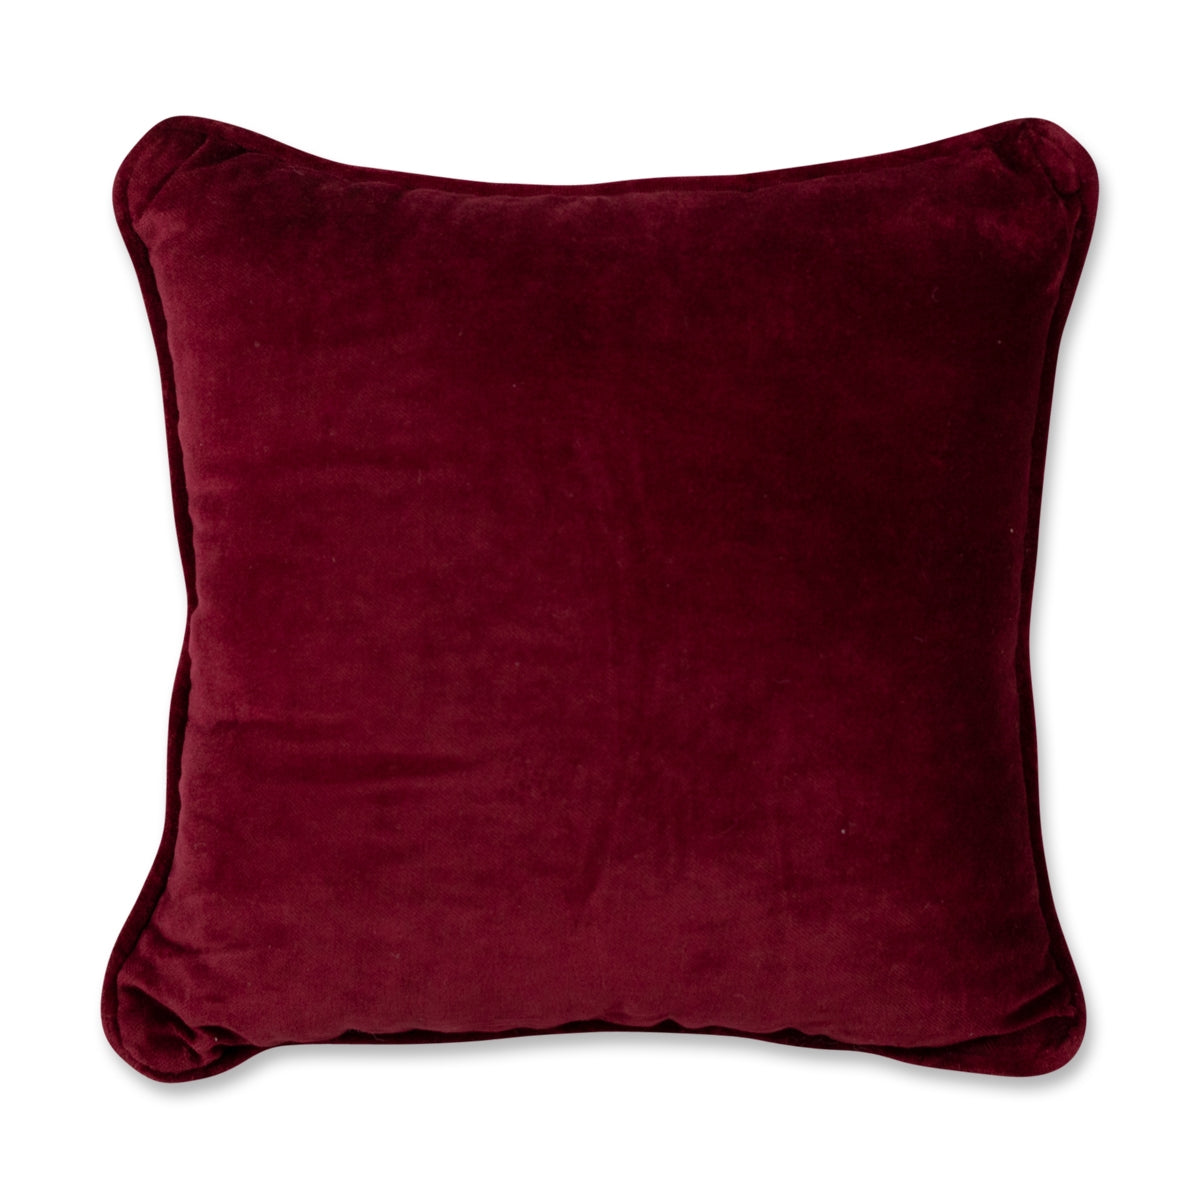 Pillow - Apres All Day Needlepoint Pillow